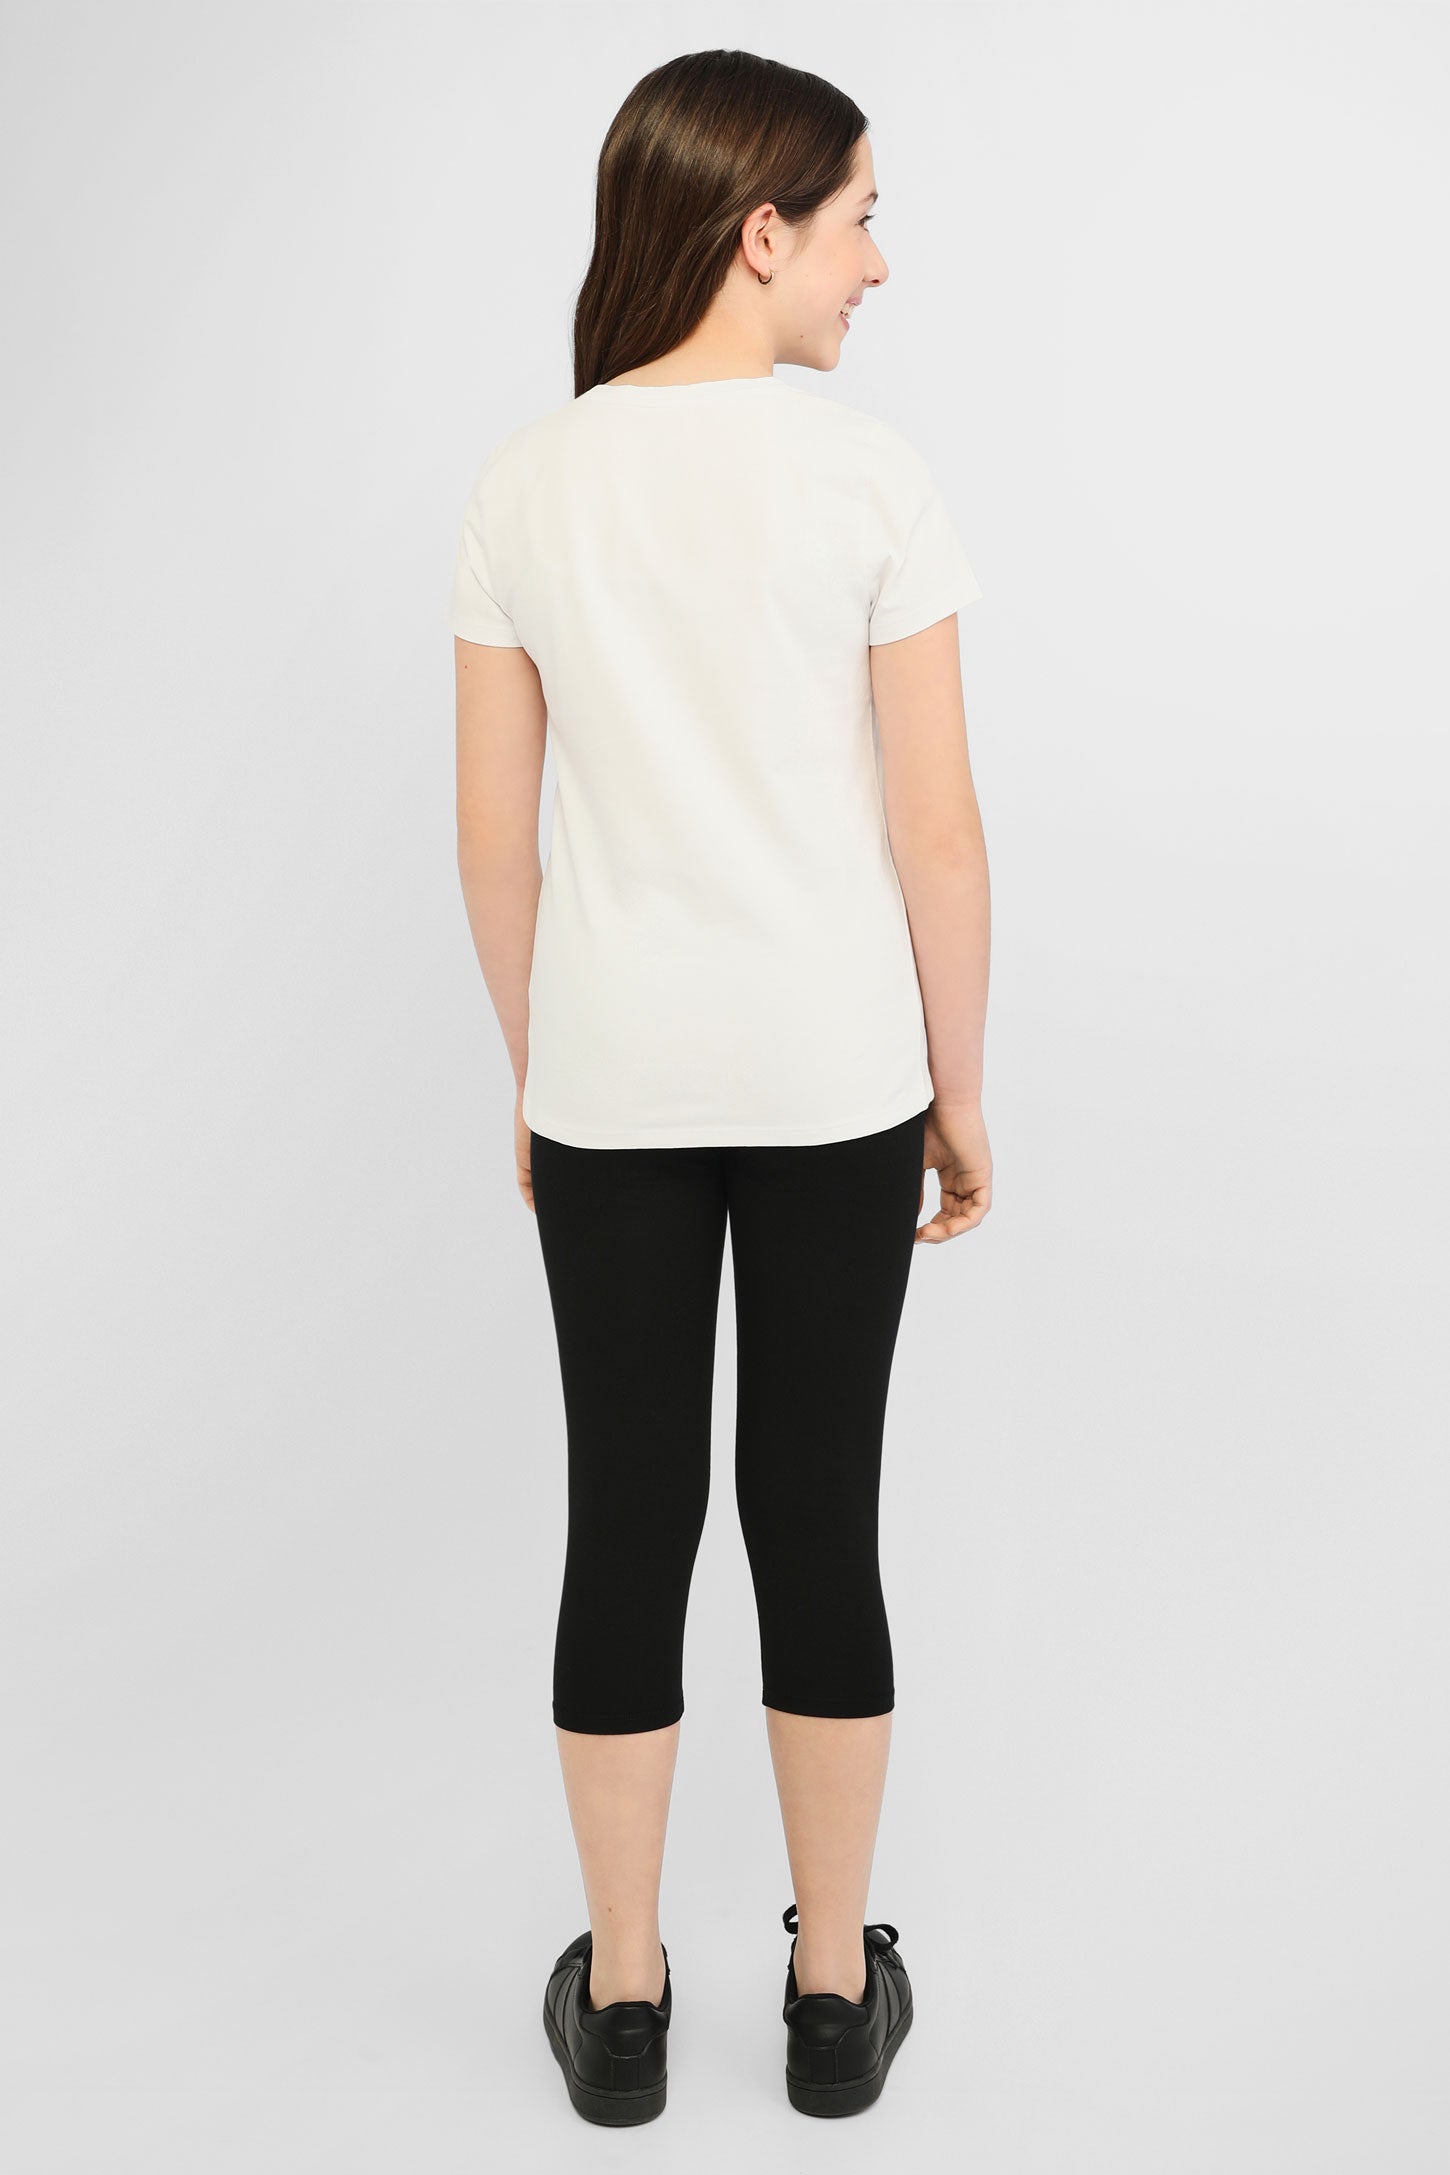 T-shirt à poche en coton bio, 2/25$ - Ado fille && BLANC